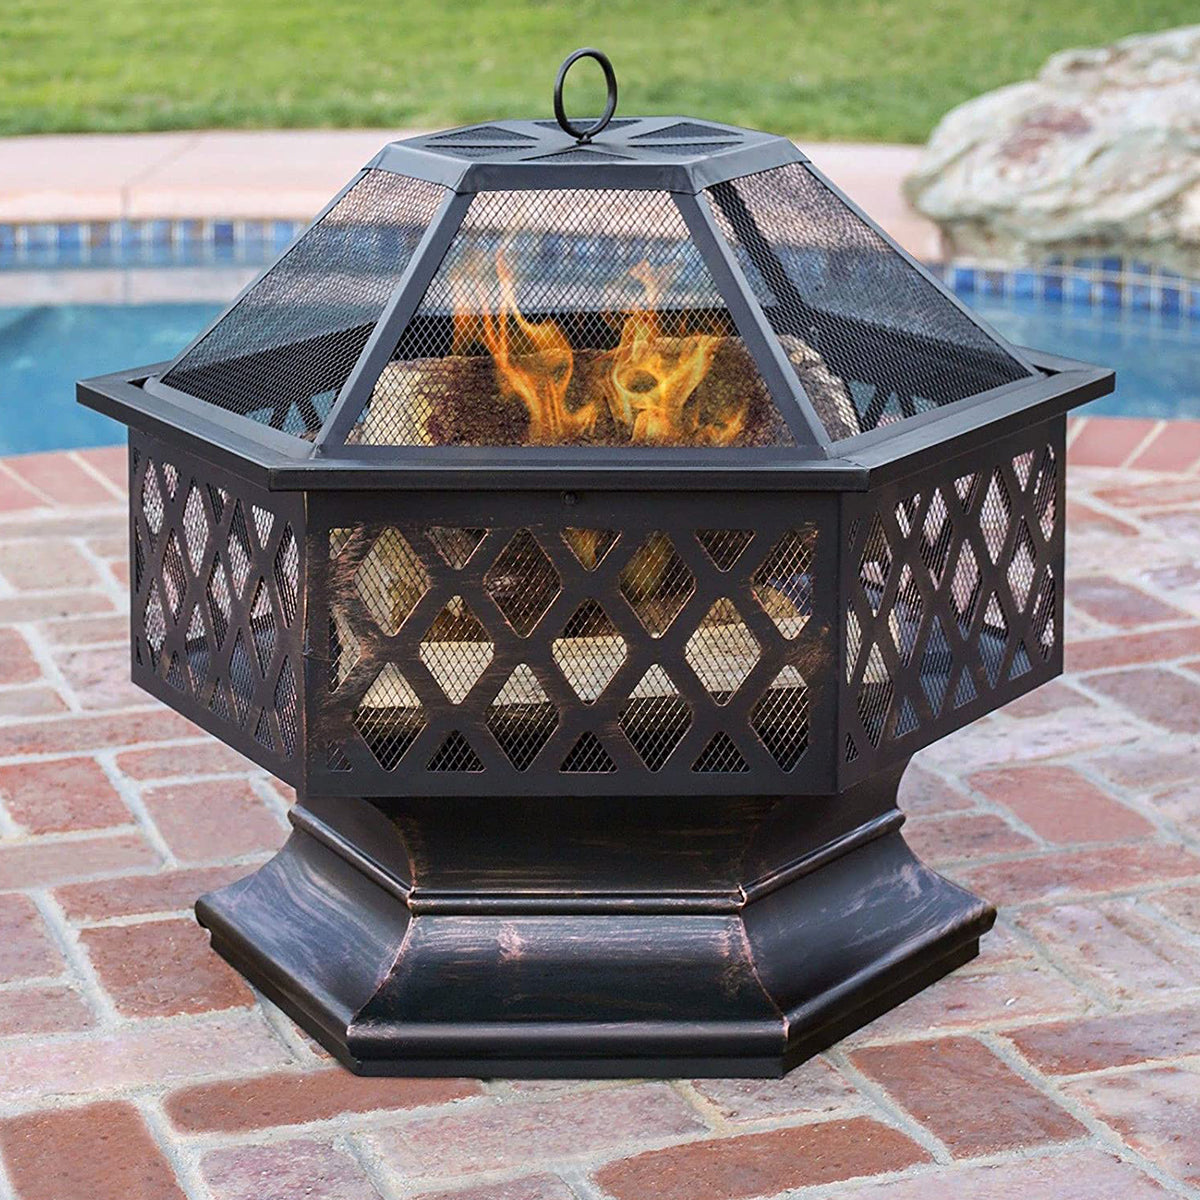 CGC ROSEMARY Hexagonal Large Luxury Fire Pit / Patio Heater / BBQ